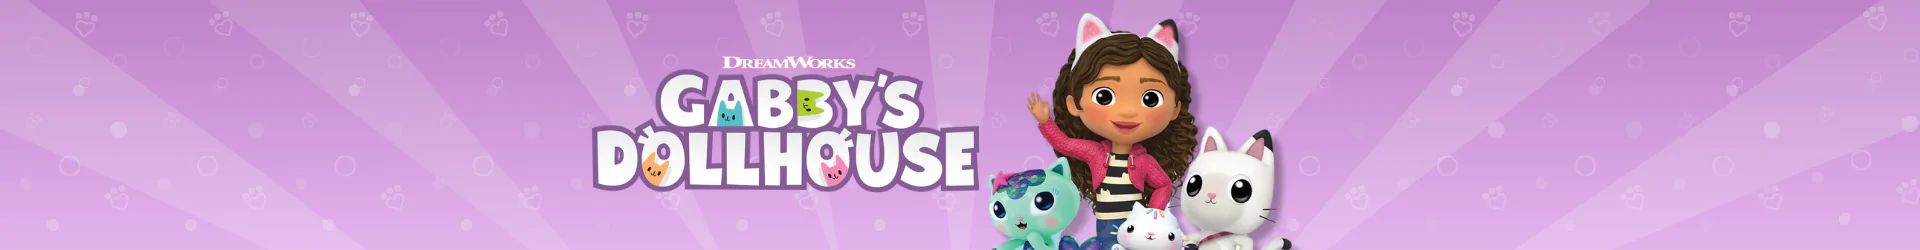 Gabbys Dollhouse caps banner